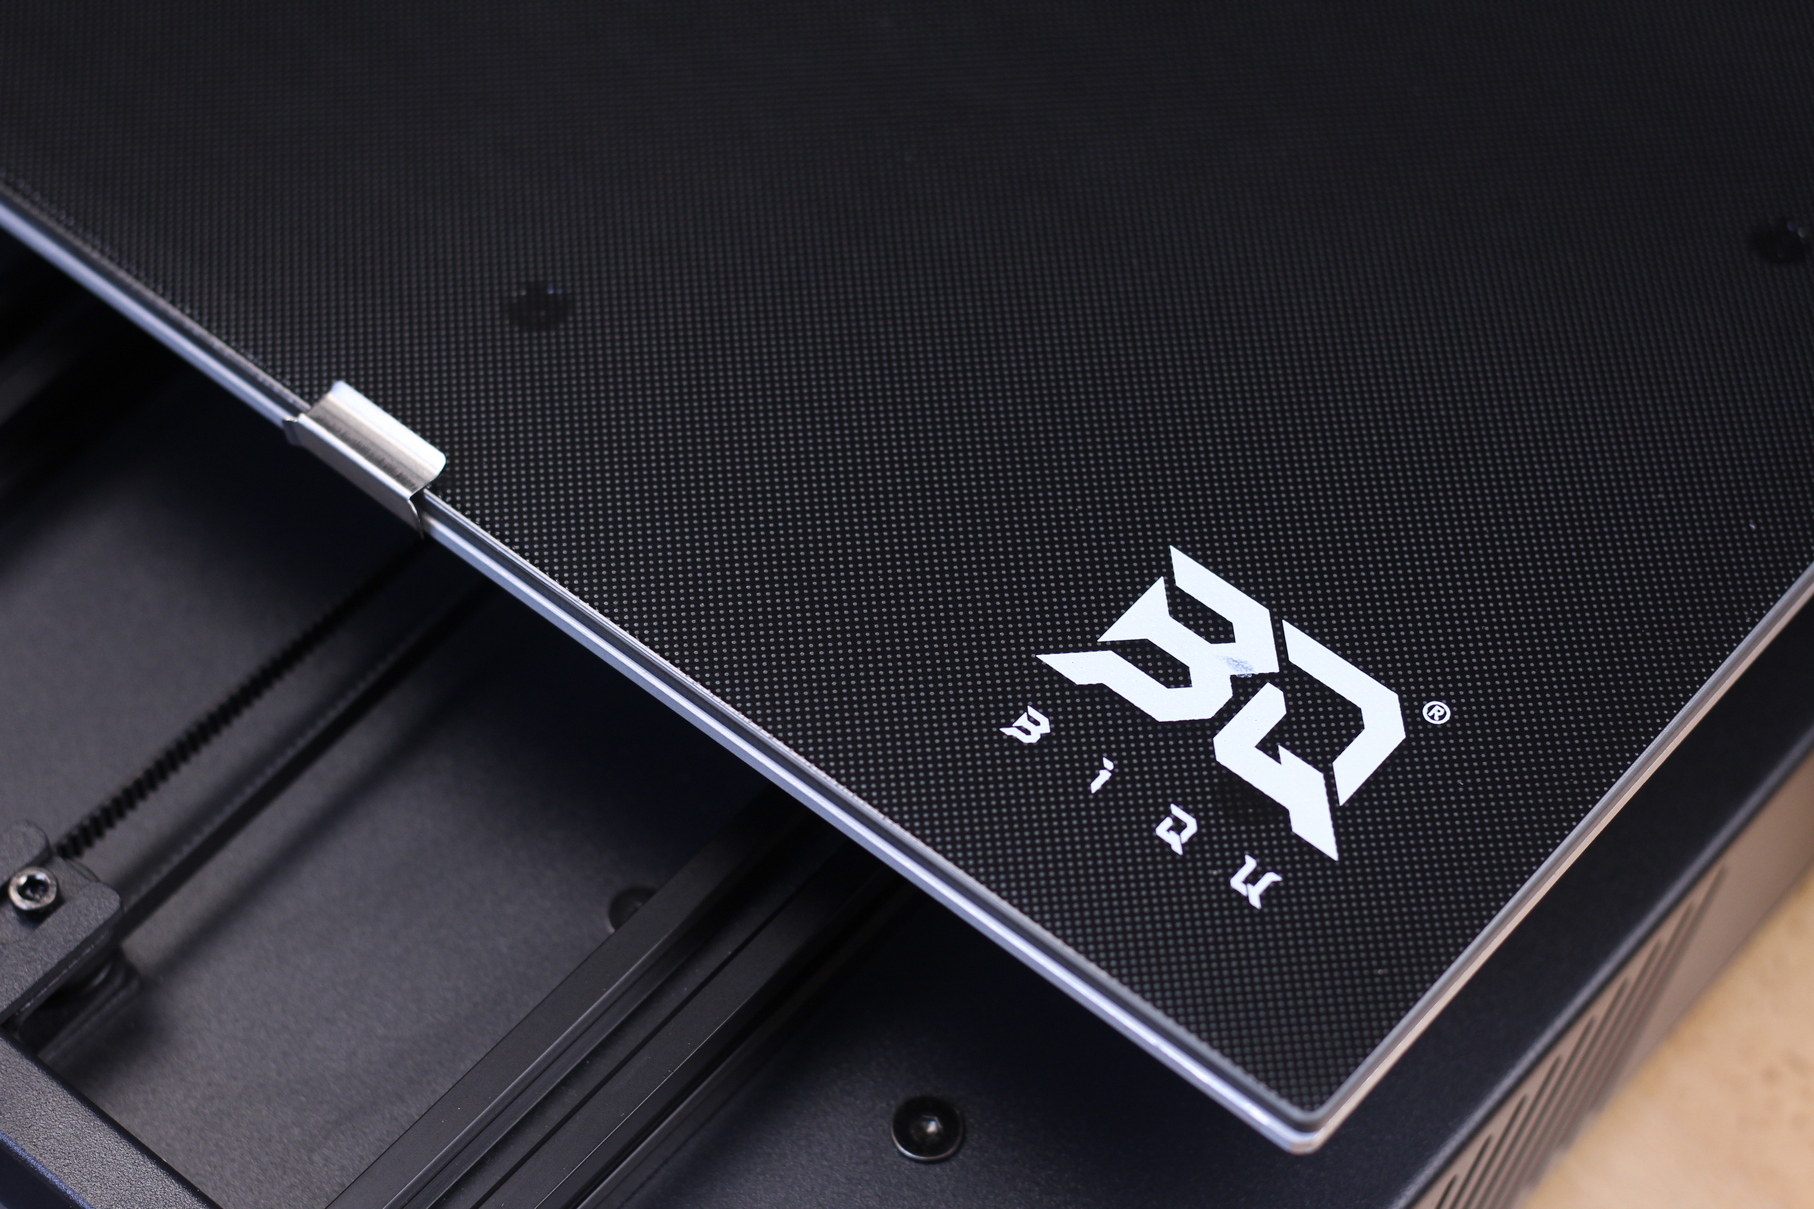 BIQU B1 SE glass print surface | BIQU B1 SE PLUS Review: SKR 2 and ABL from Factory